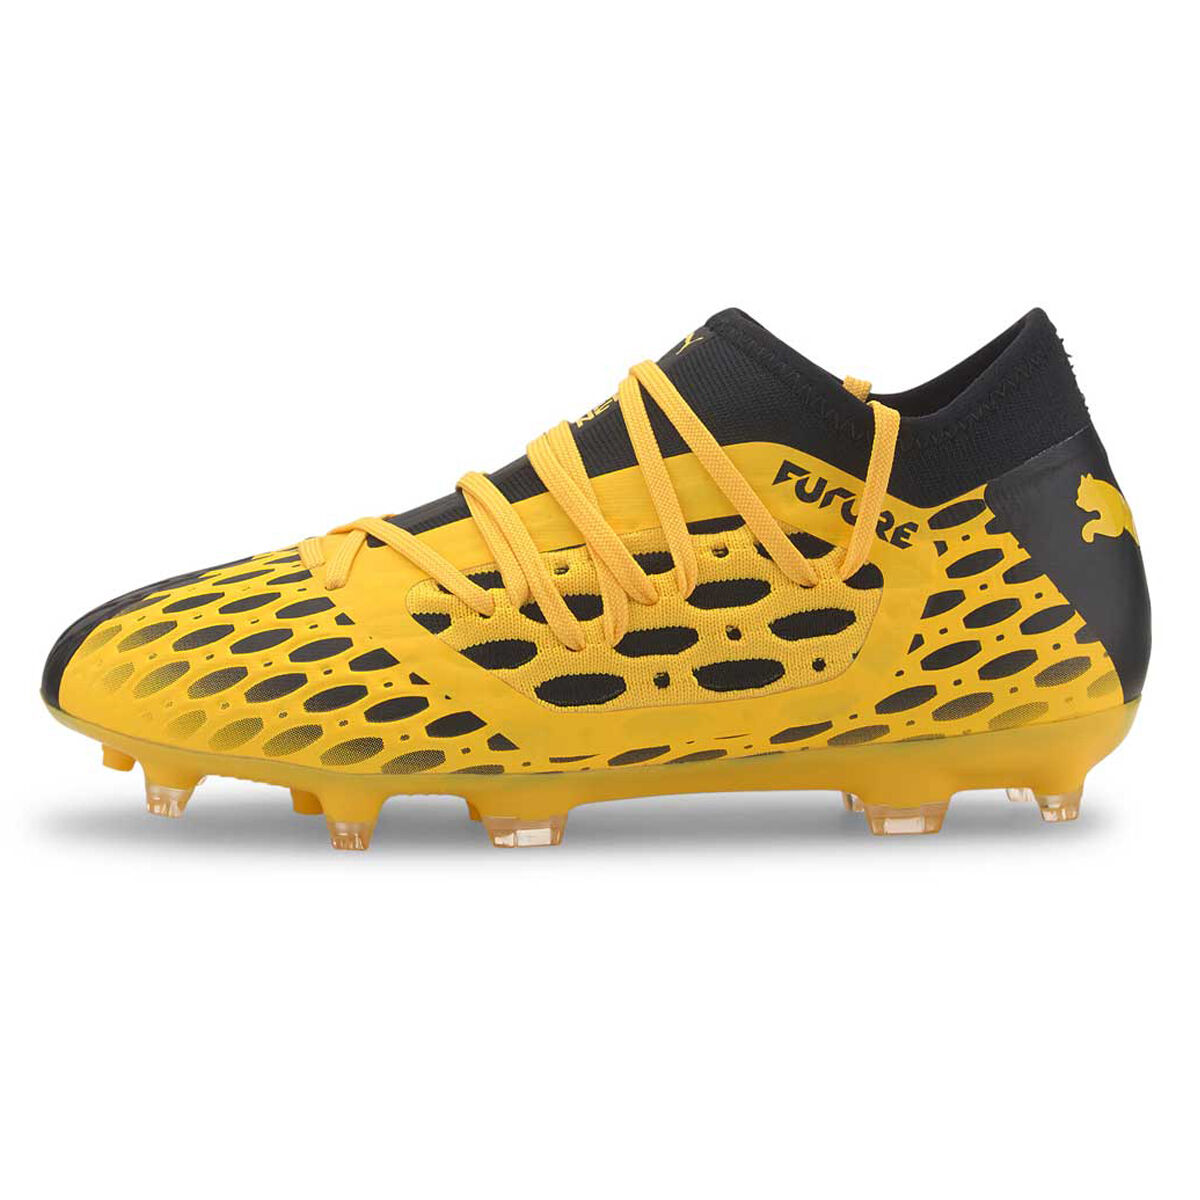 puma football boots yellow